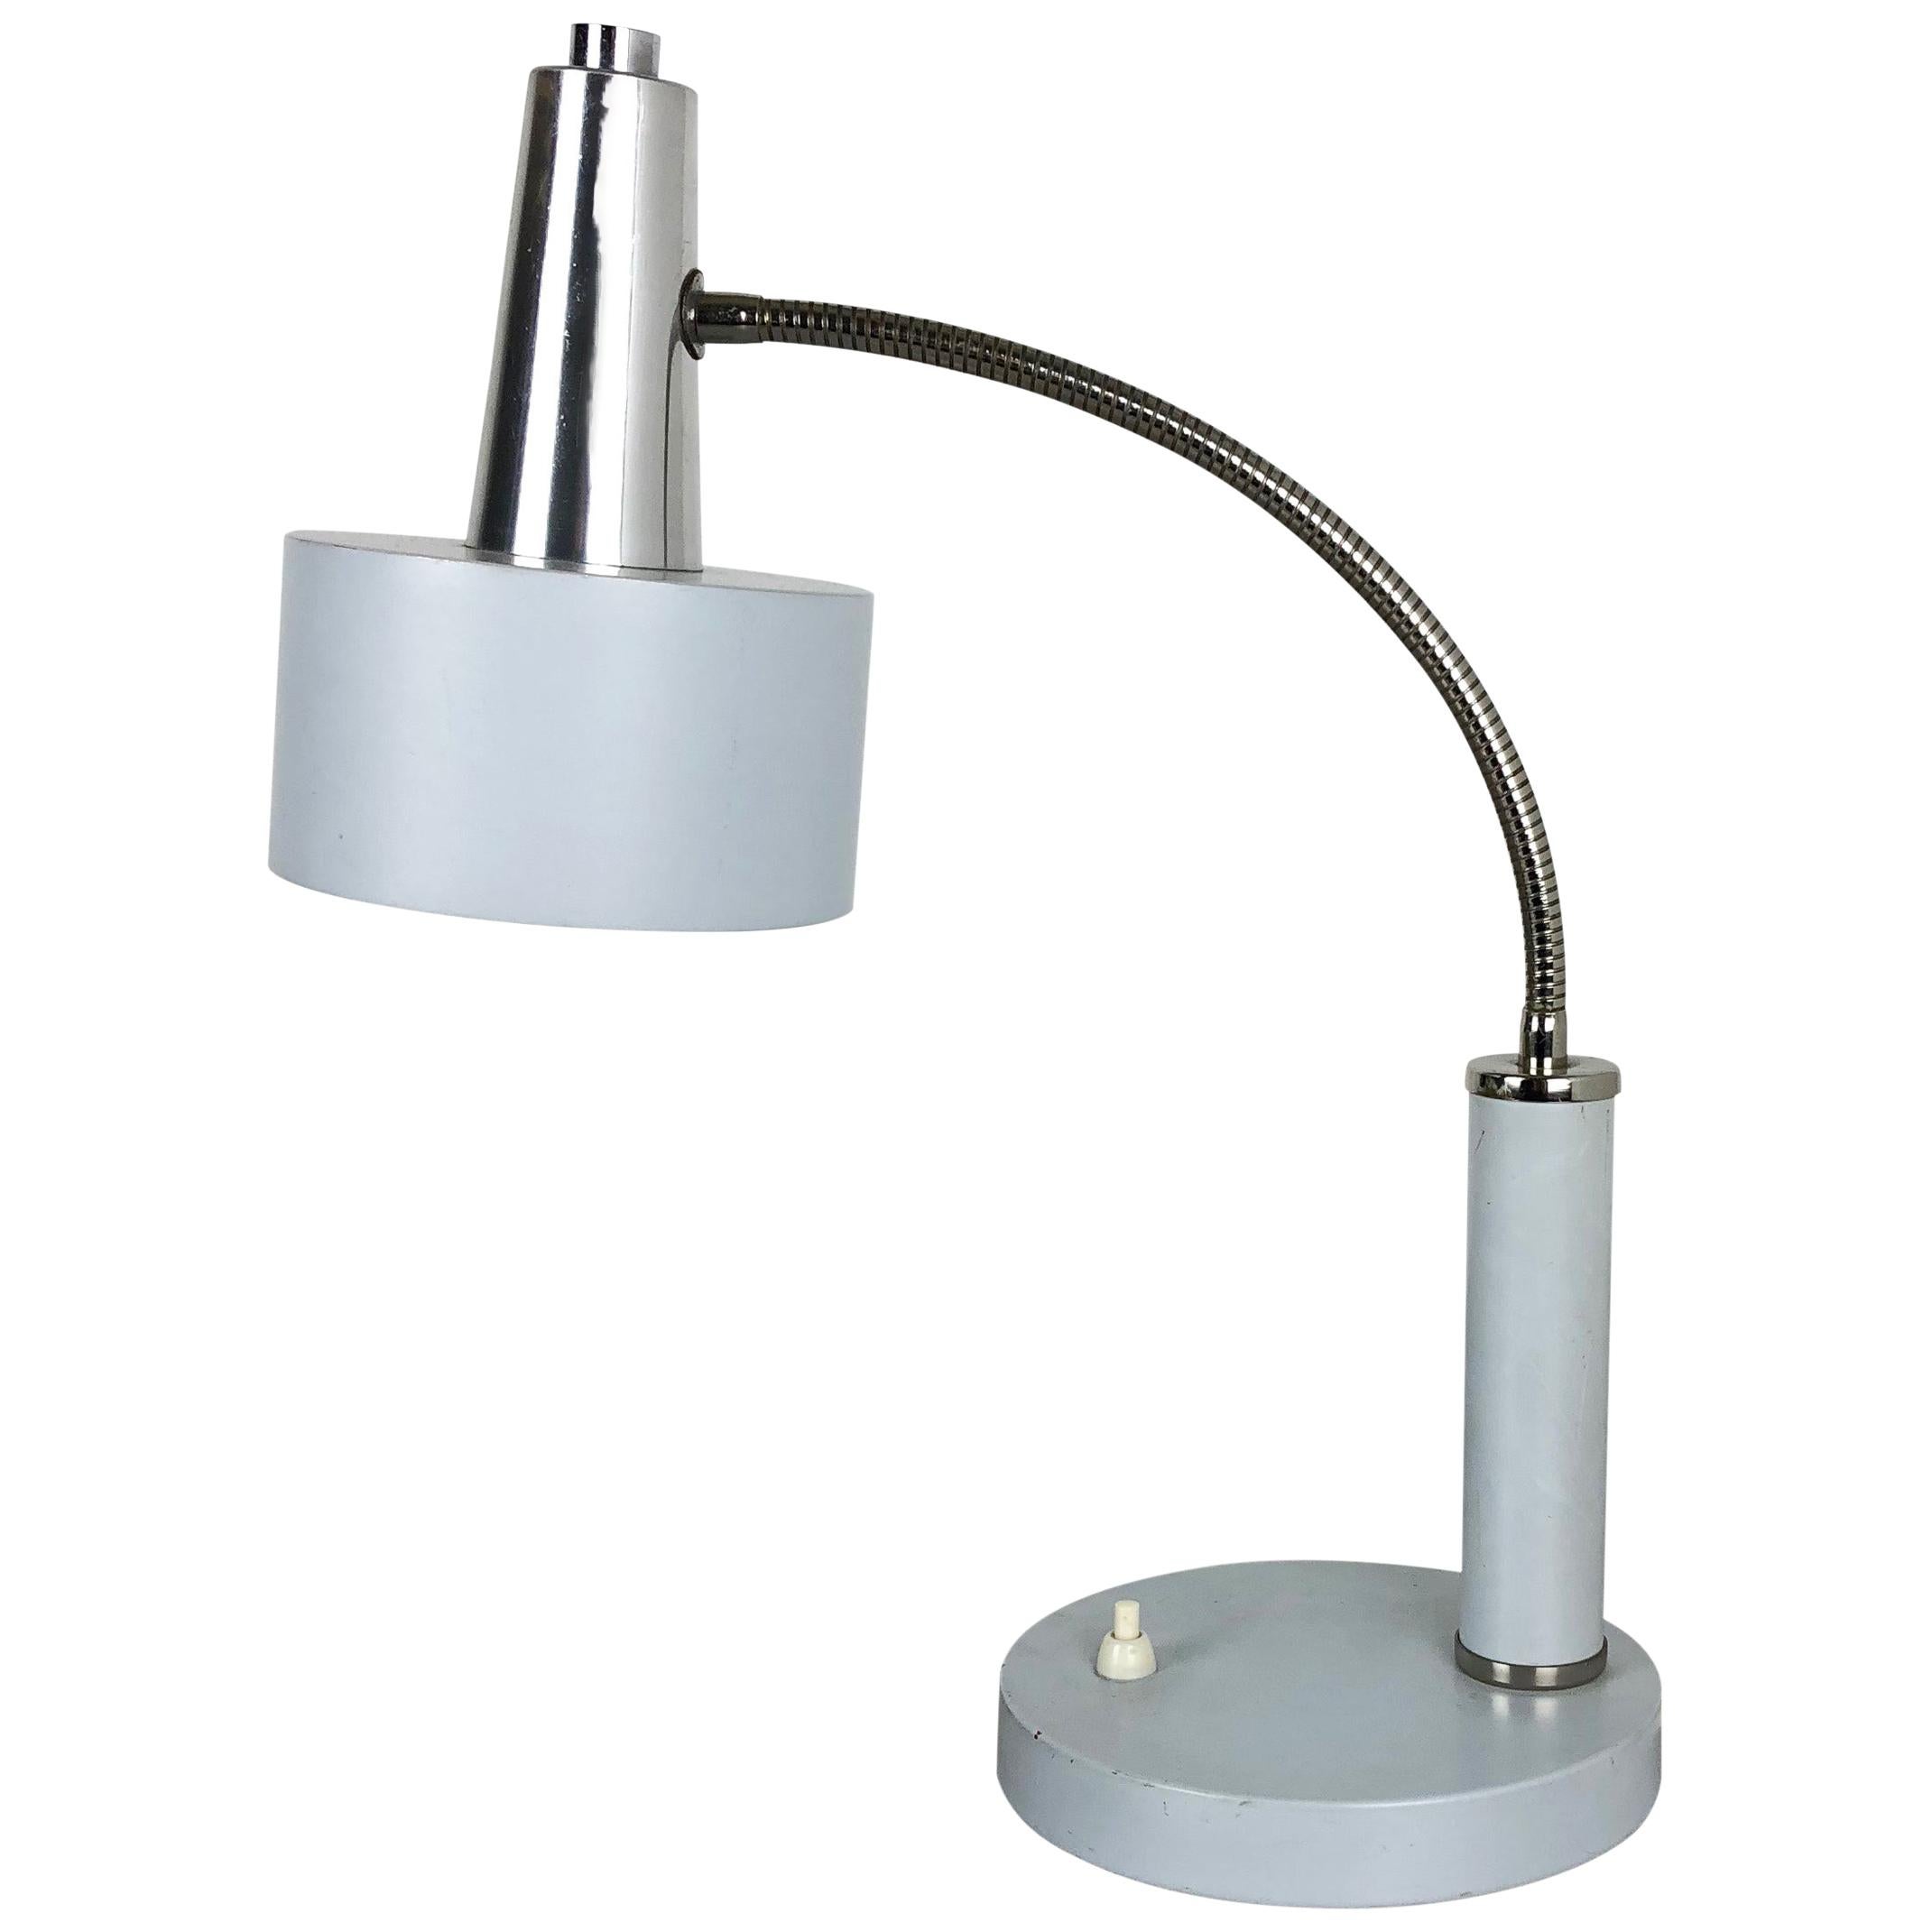 Original Modernist 1960s Metal Table Light Made by SIS Lights Attrib., Germany